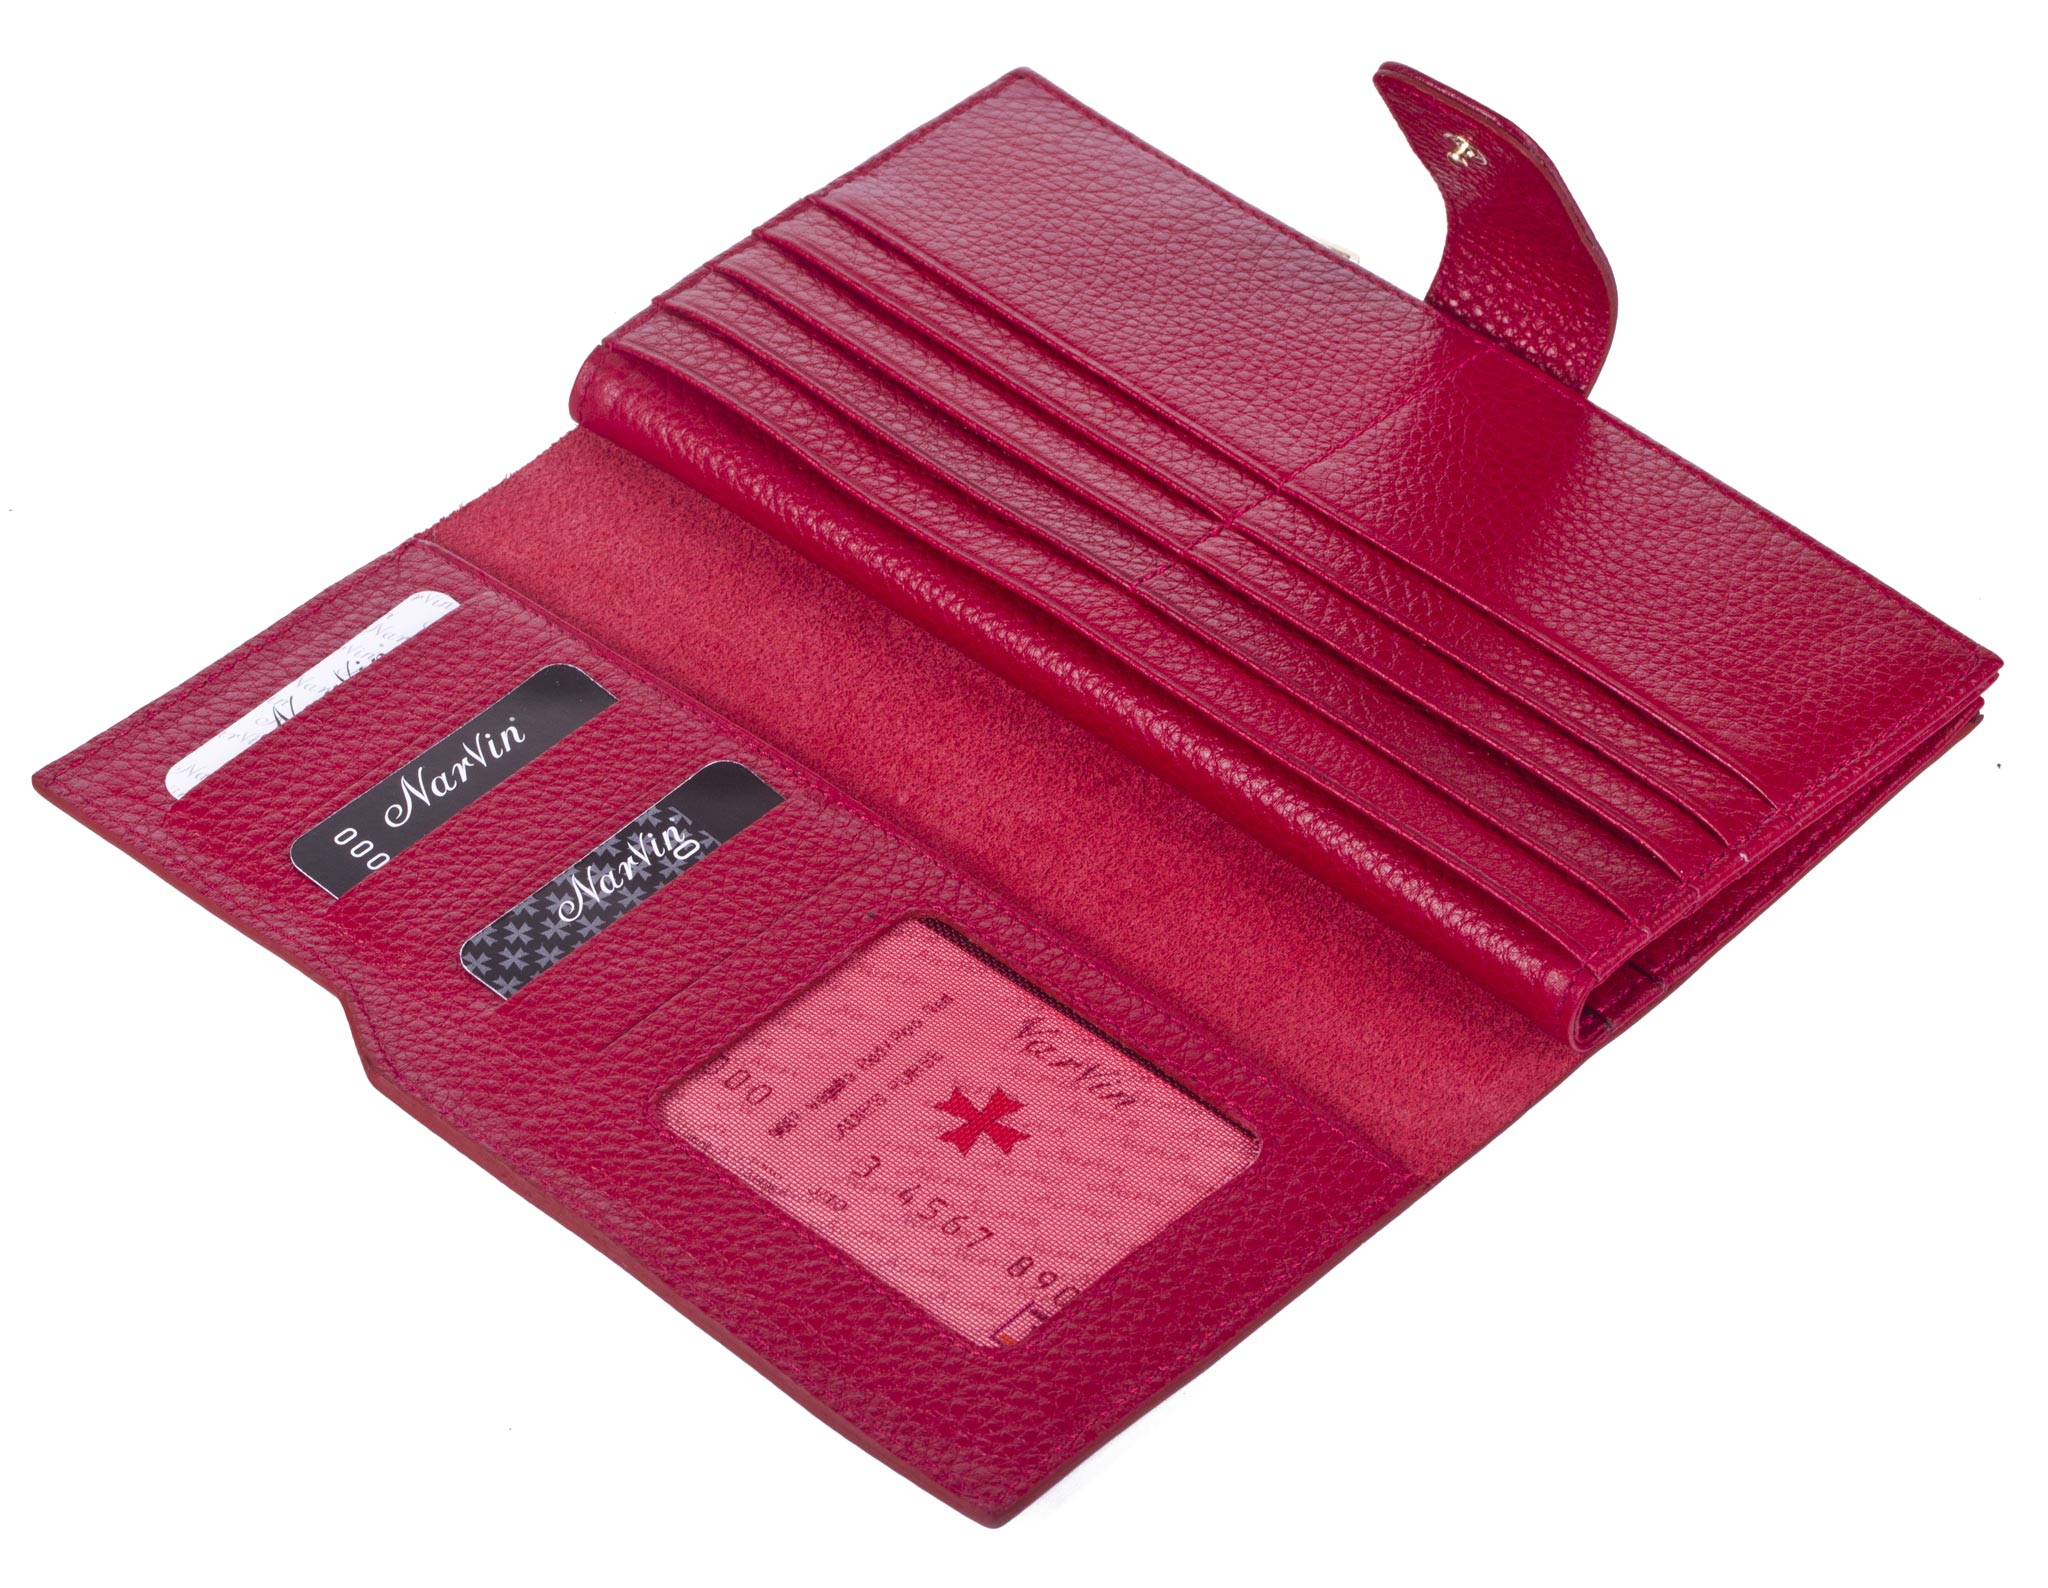 Бумажник
Narvin
9687-N.Vegetta Red Кошельки и портмоне